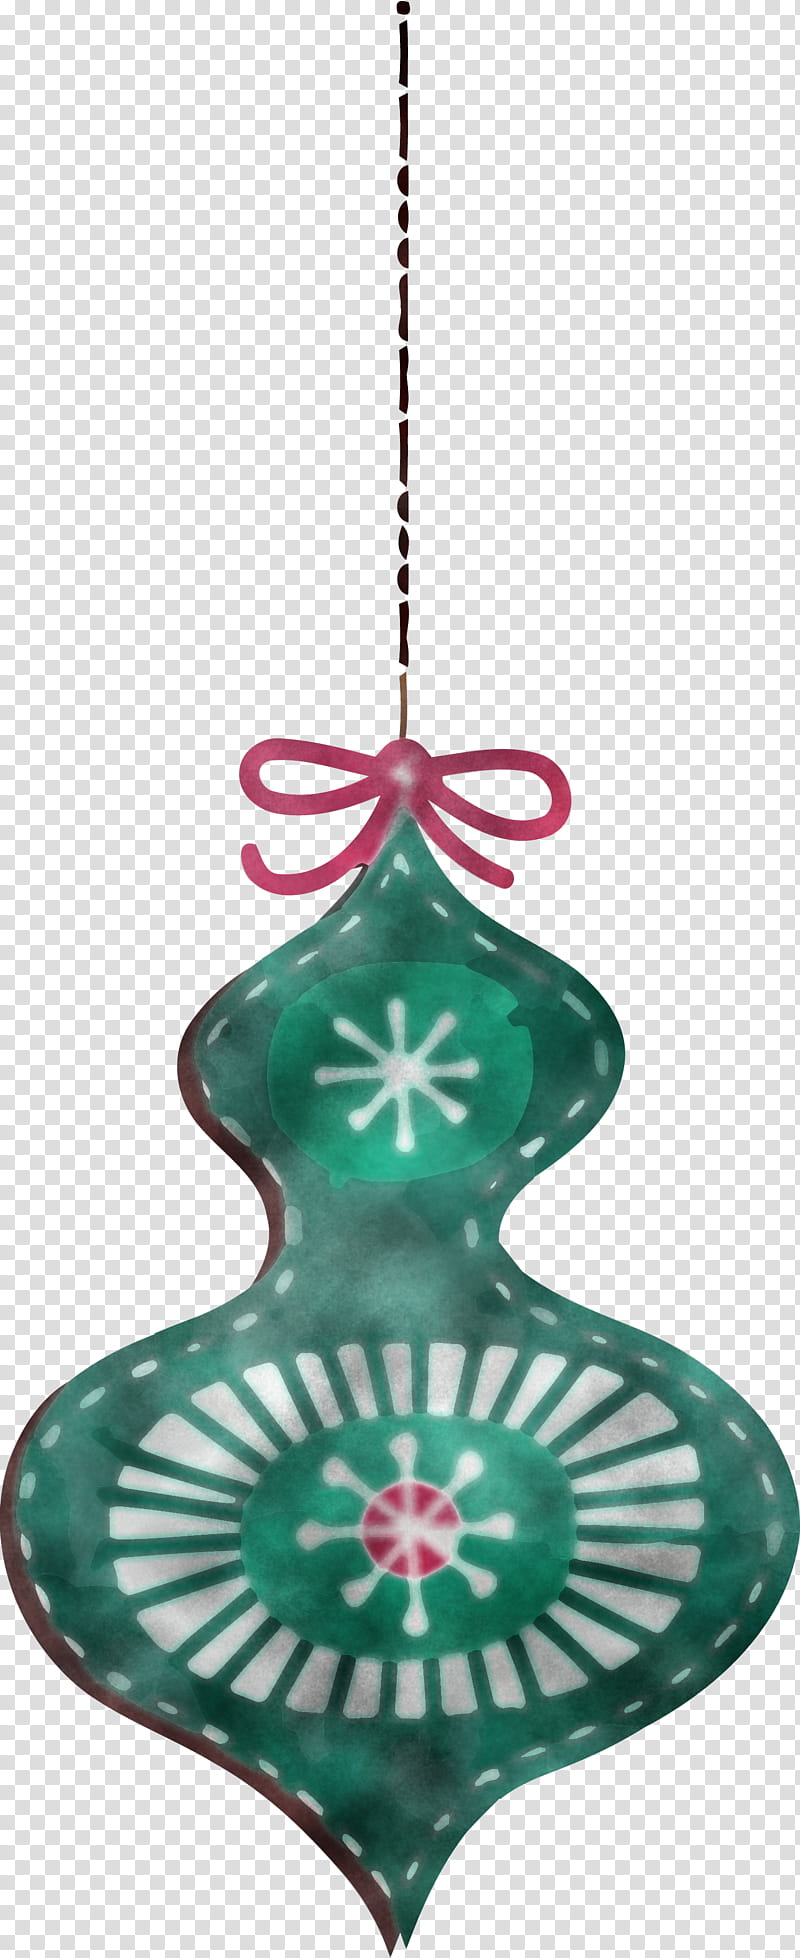 Christmas tag Christmas Ornament, Holiday Ornament, Green, Christmas Decoration, Interior Design, Glass, Christmas , Christmas Tree transparent background PNG clipart